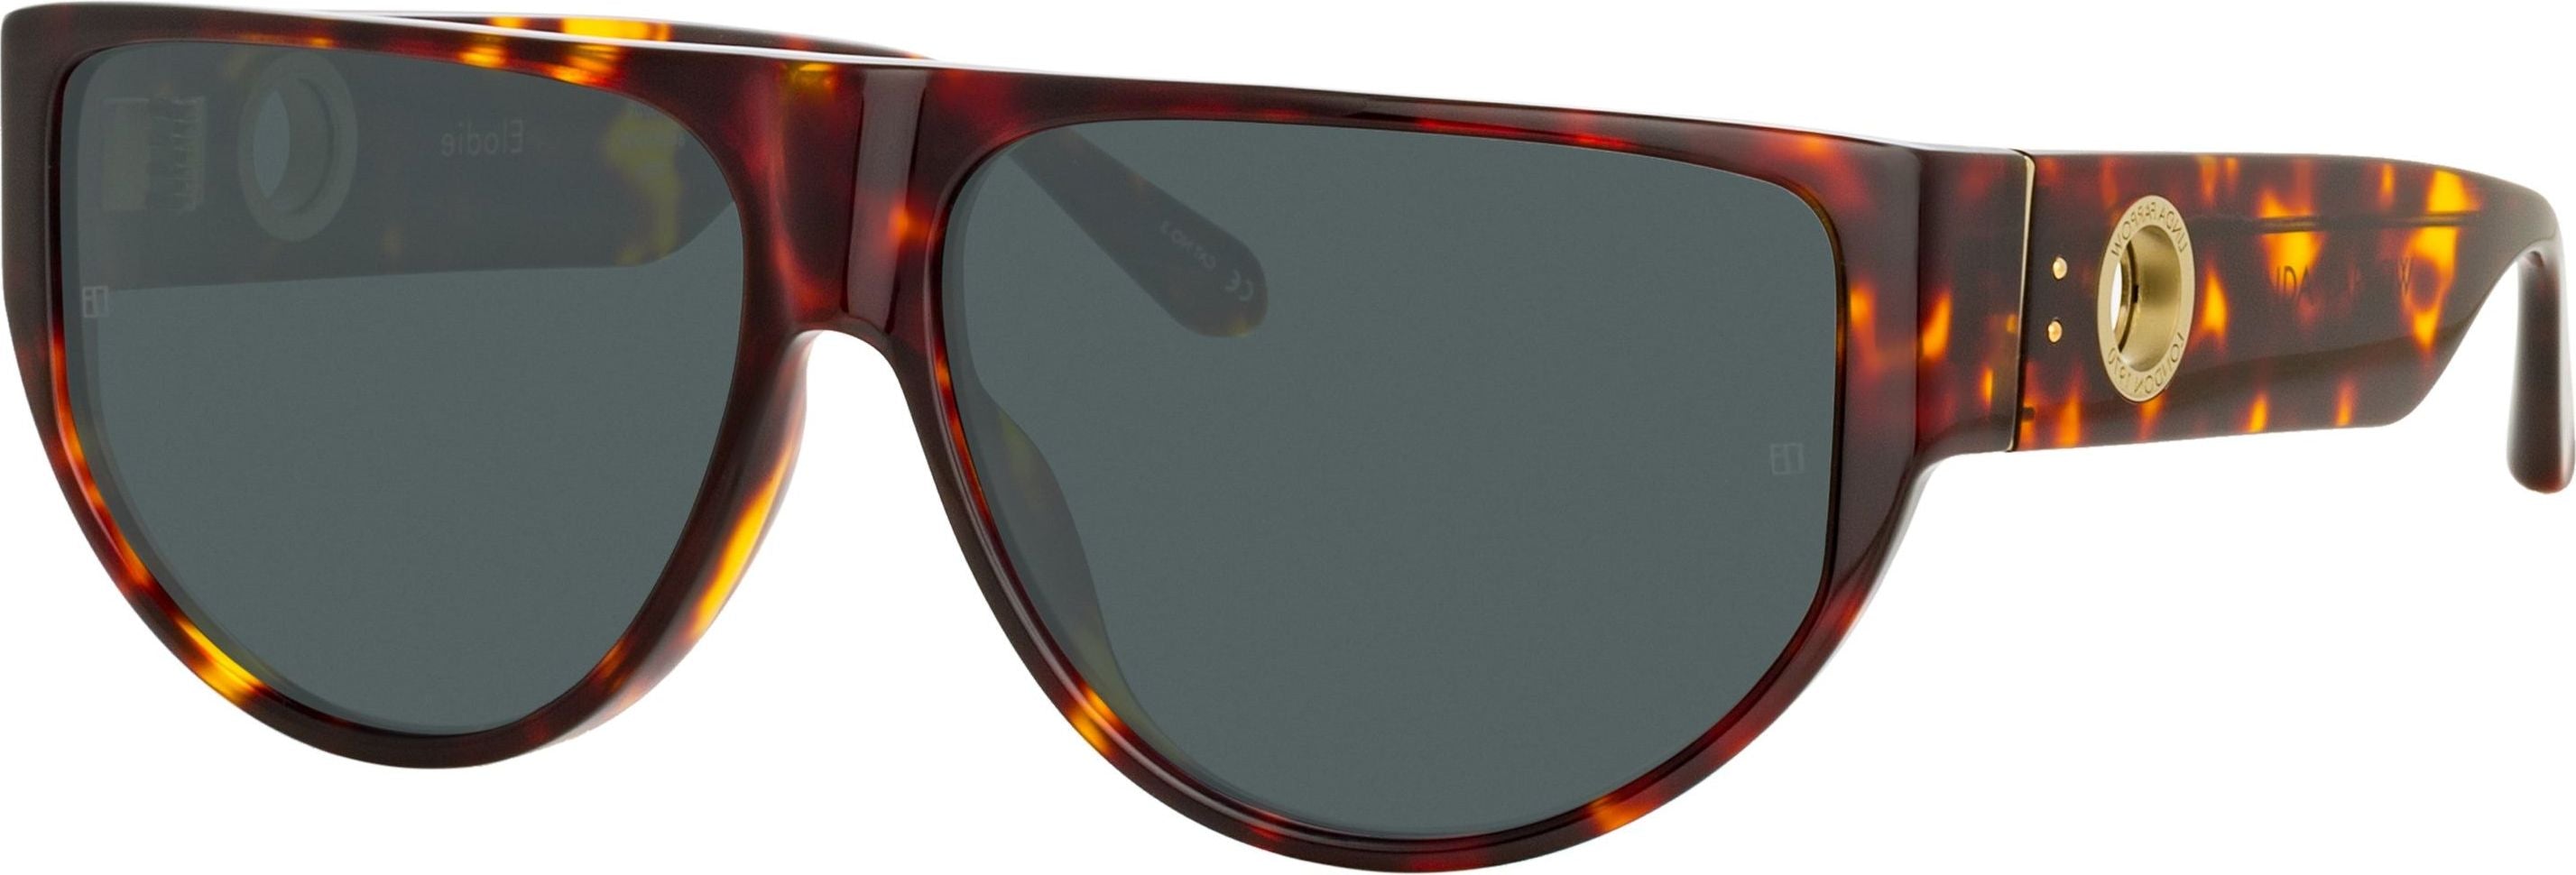 Color_LFL1302C2SUN - Men's Elodie Flat Top Sunglasses in Tortoiseshell